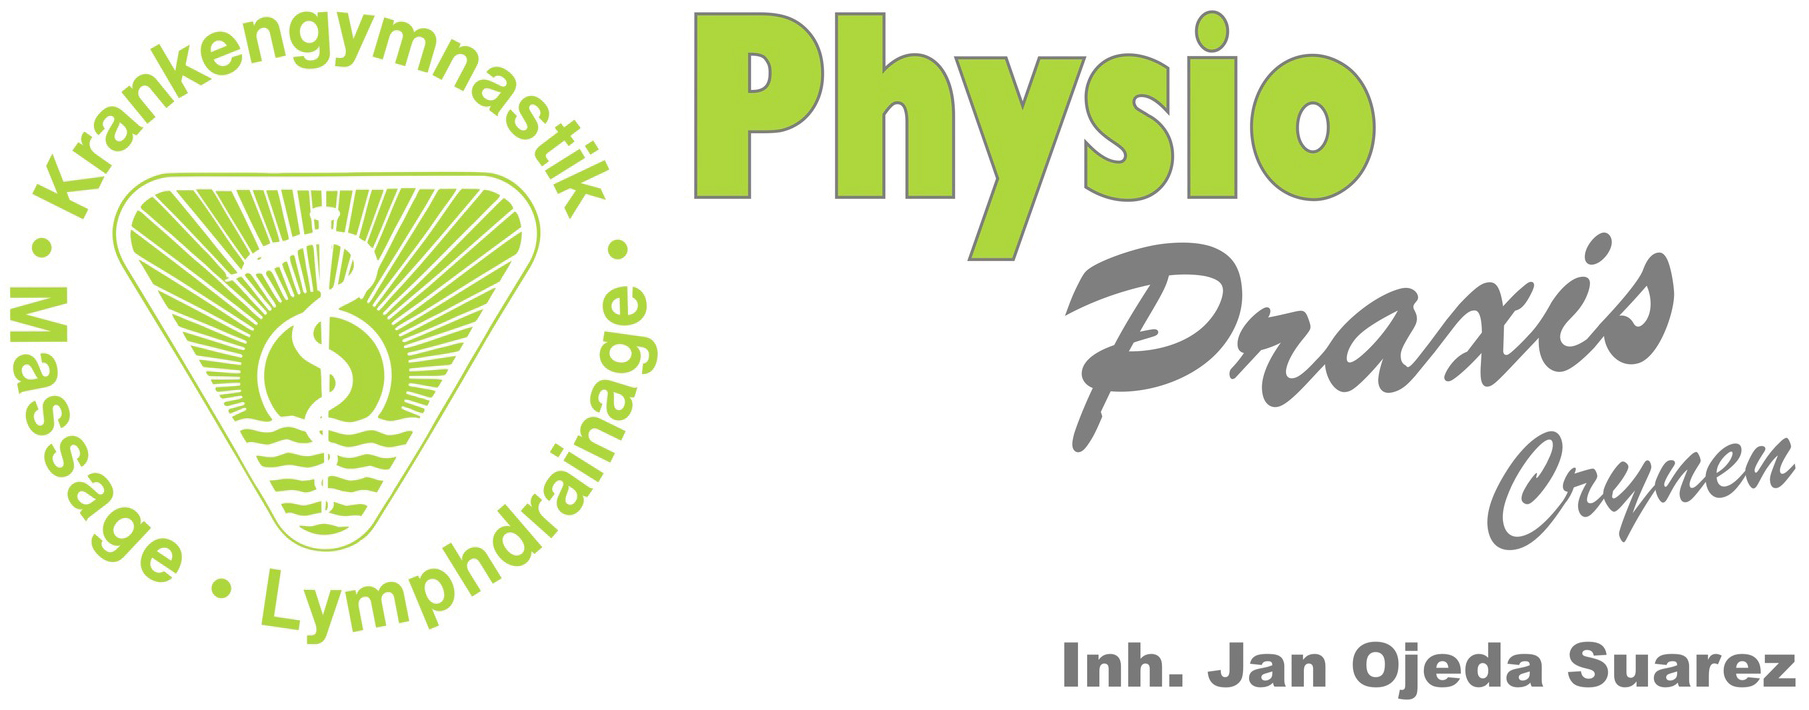 Physio-Praxis Crynen